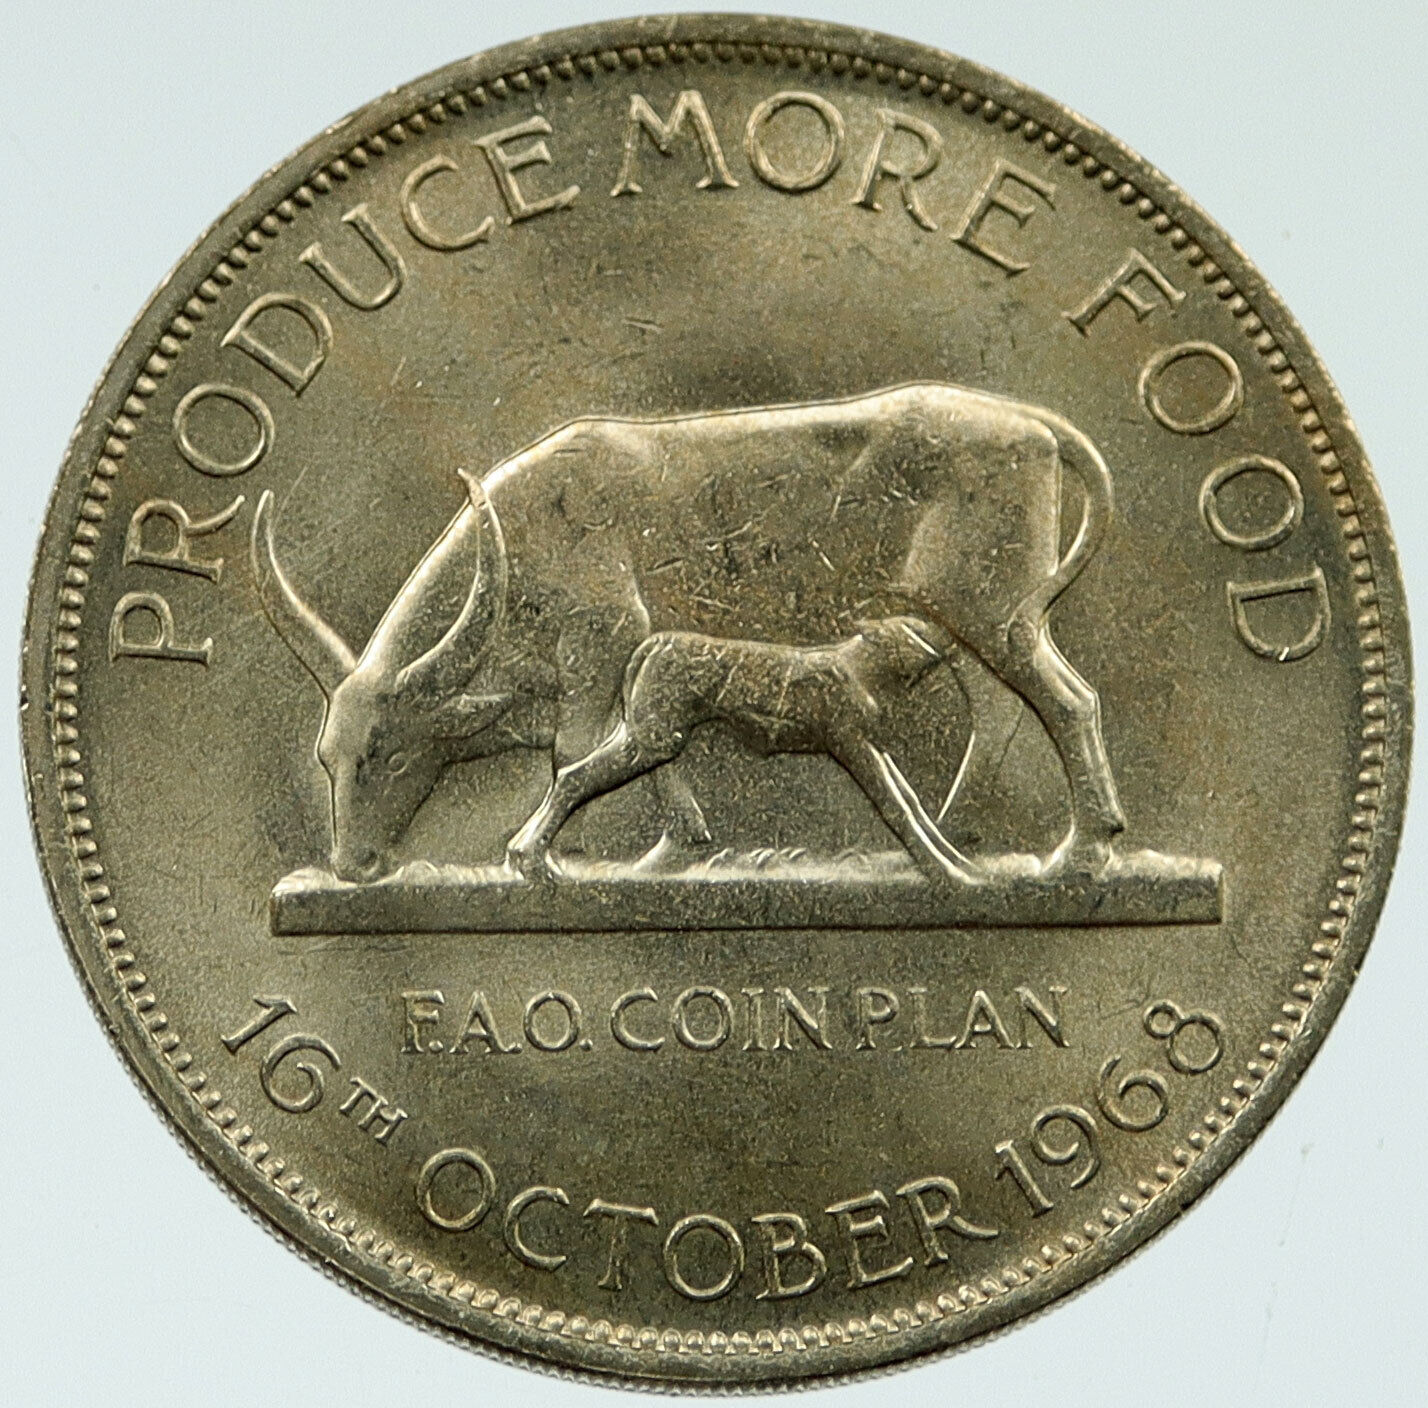 1968 UGANDA Commemorative FAO Grow Food Cow Calf 5 Shillings Coin i117289